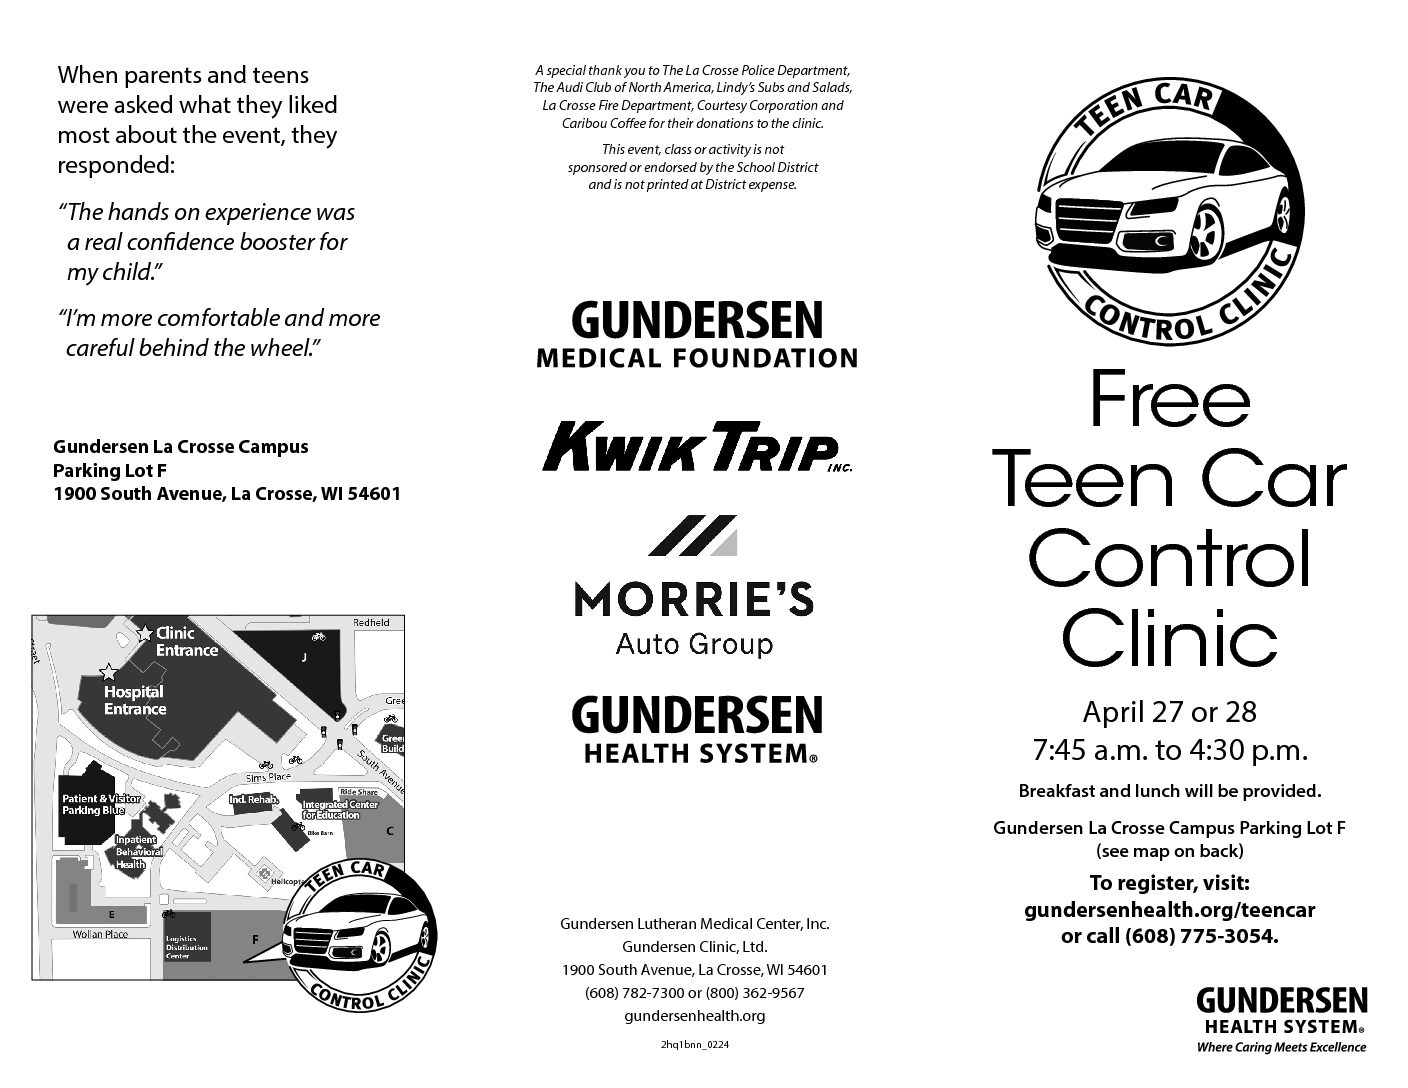 Gundersen Health System – Free Teen Car Control Clinic